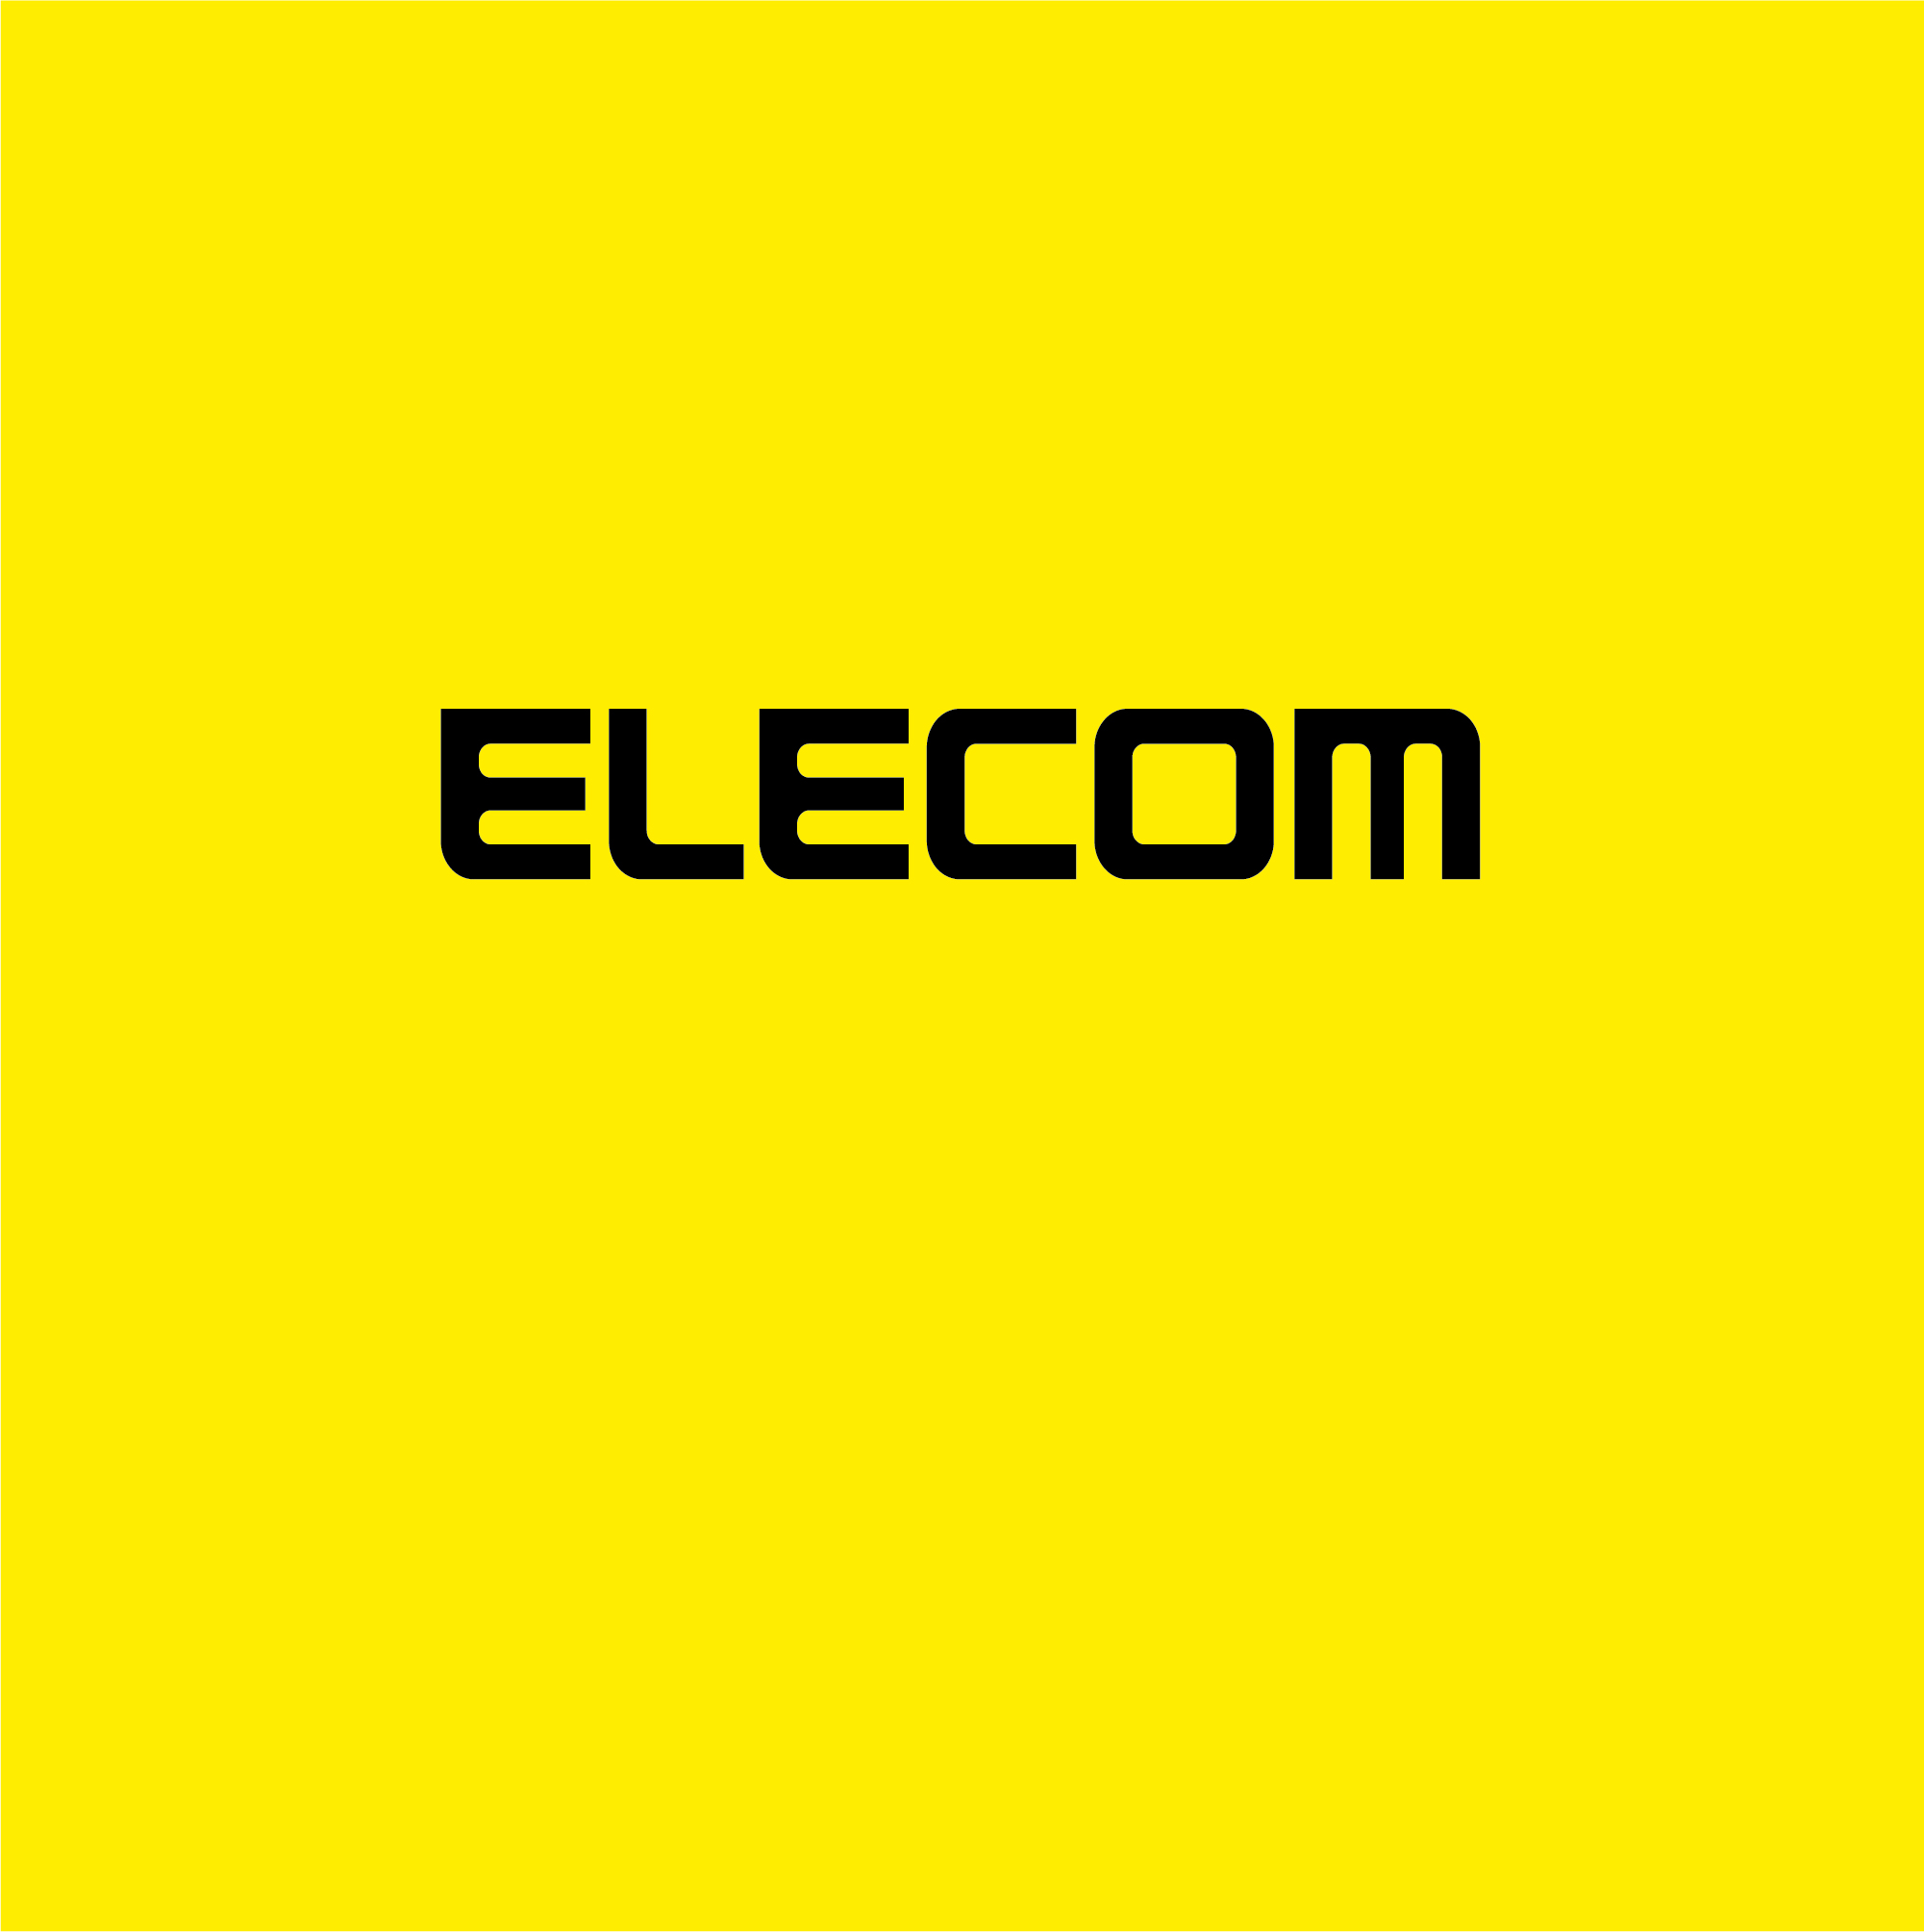 ELECOM - Sticker Yellow 60mm